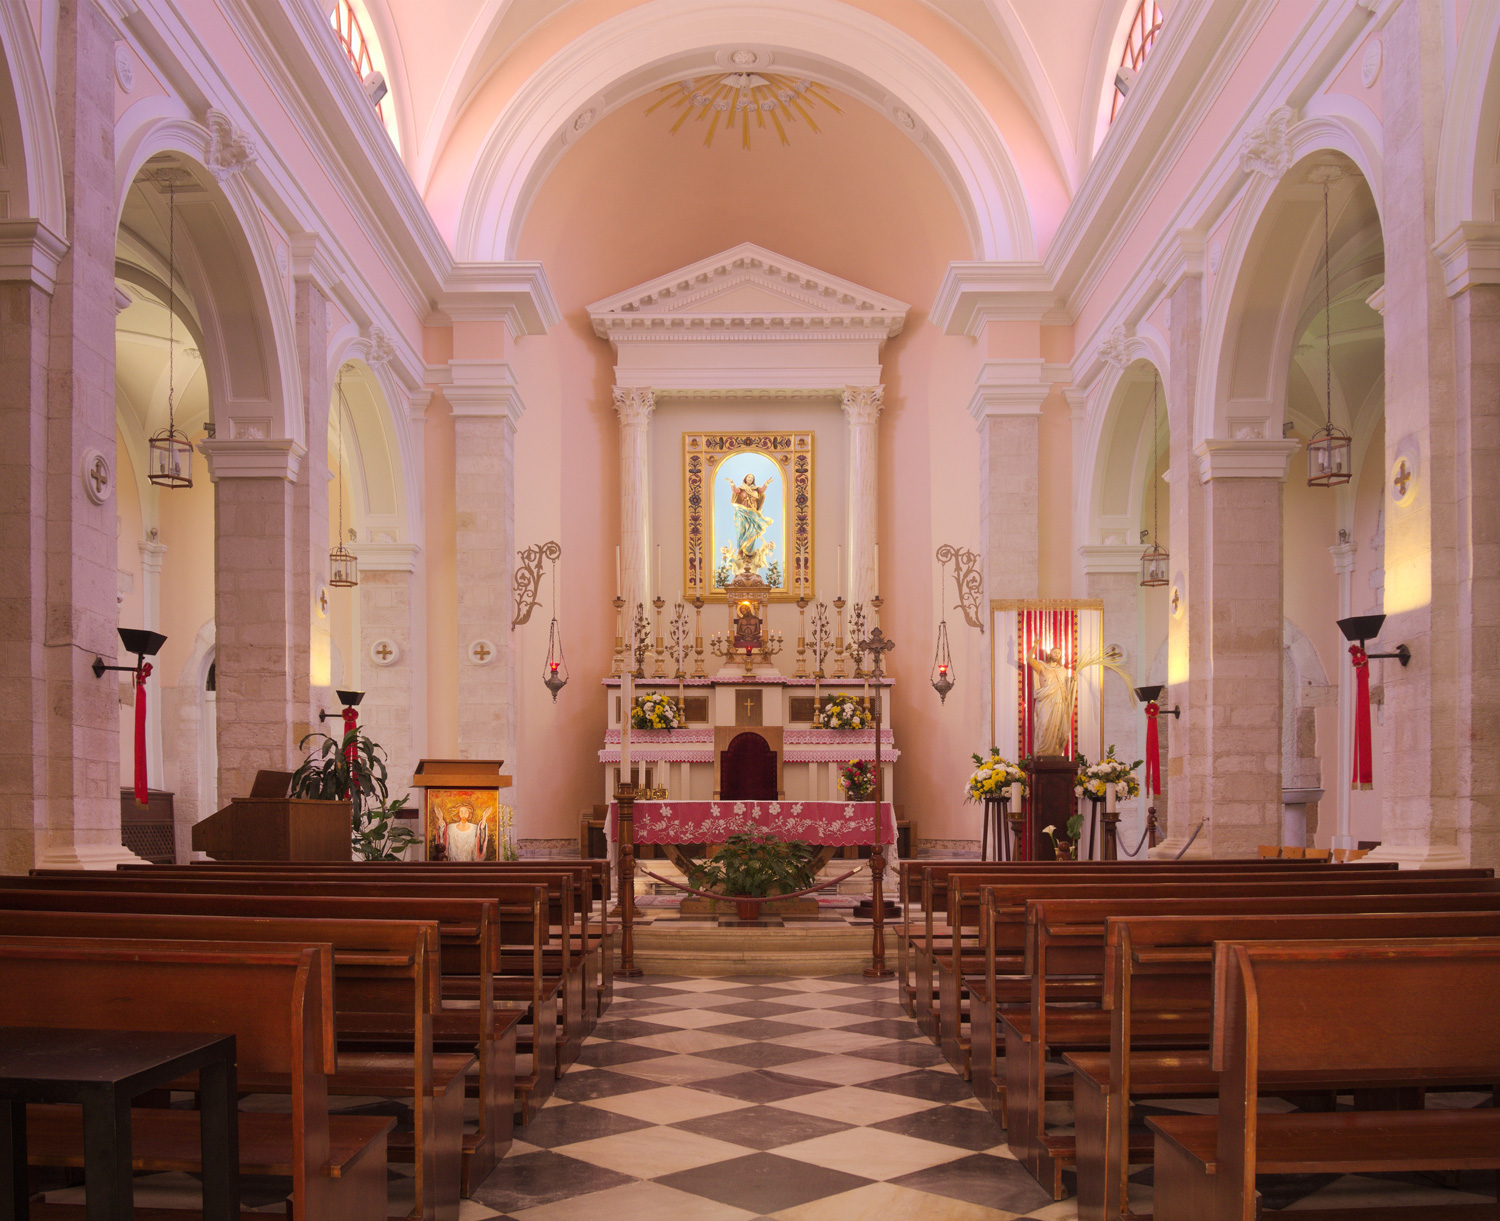 Inside the Catholic Church of Chania